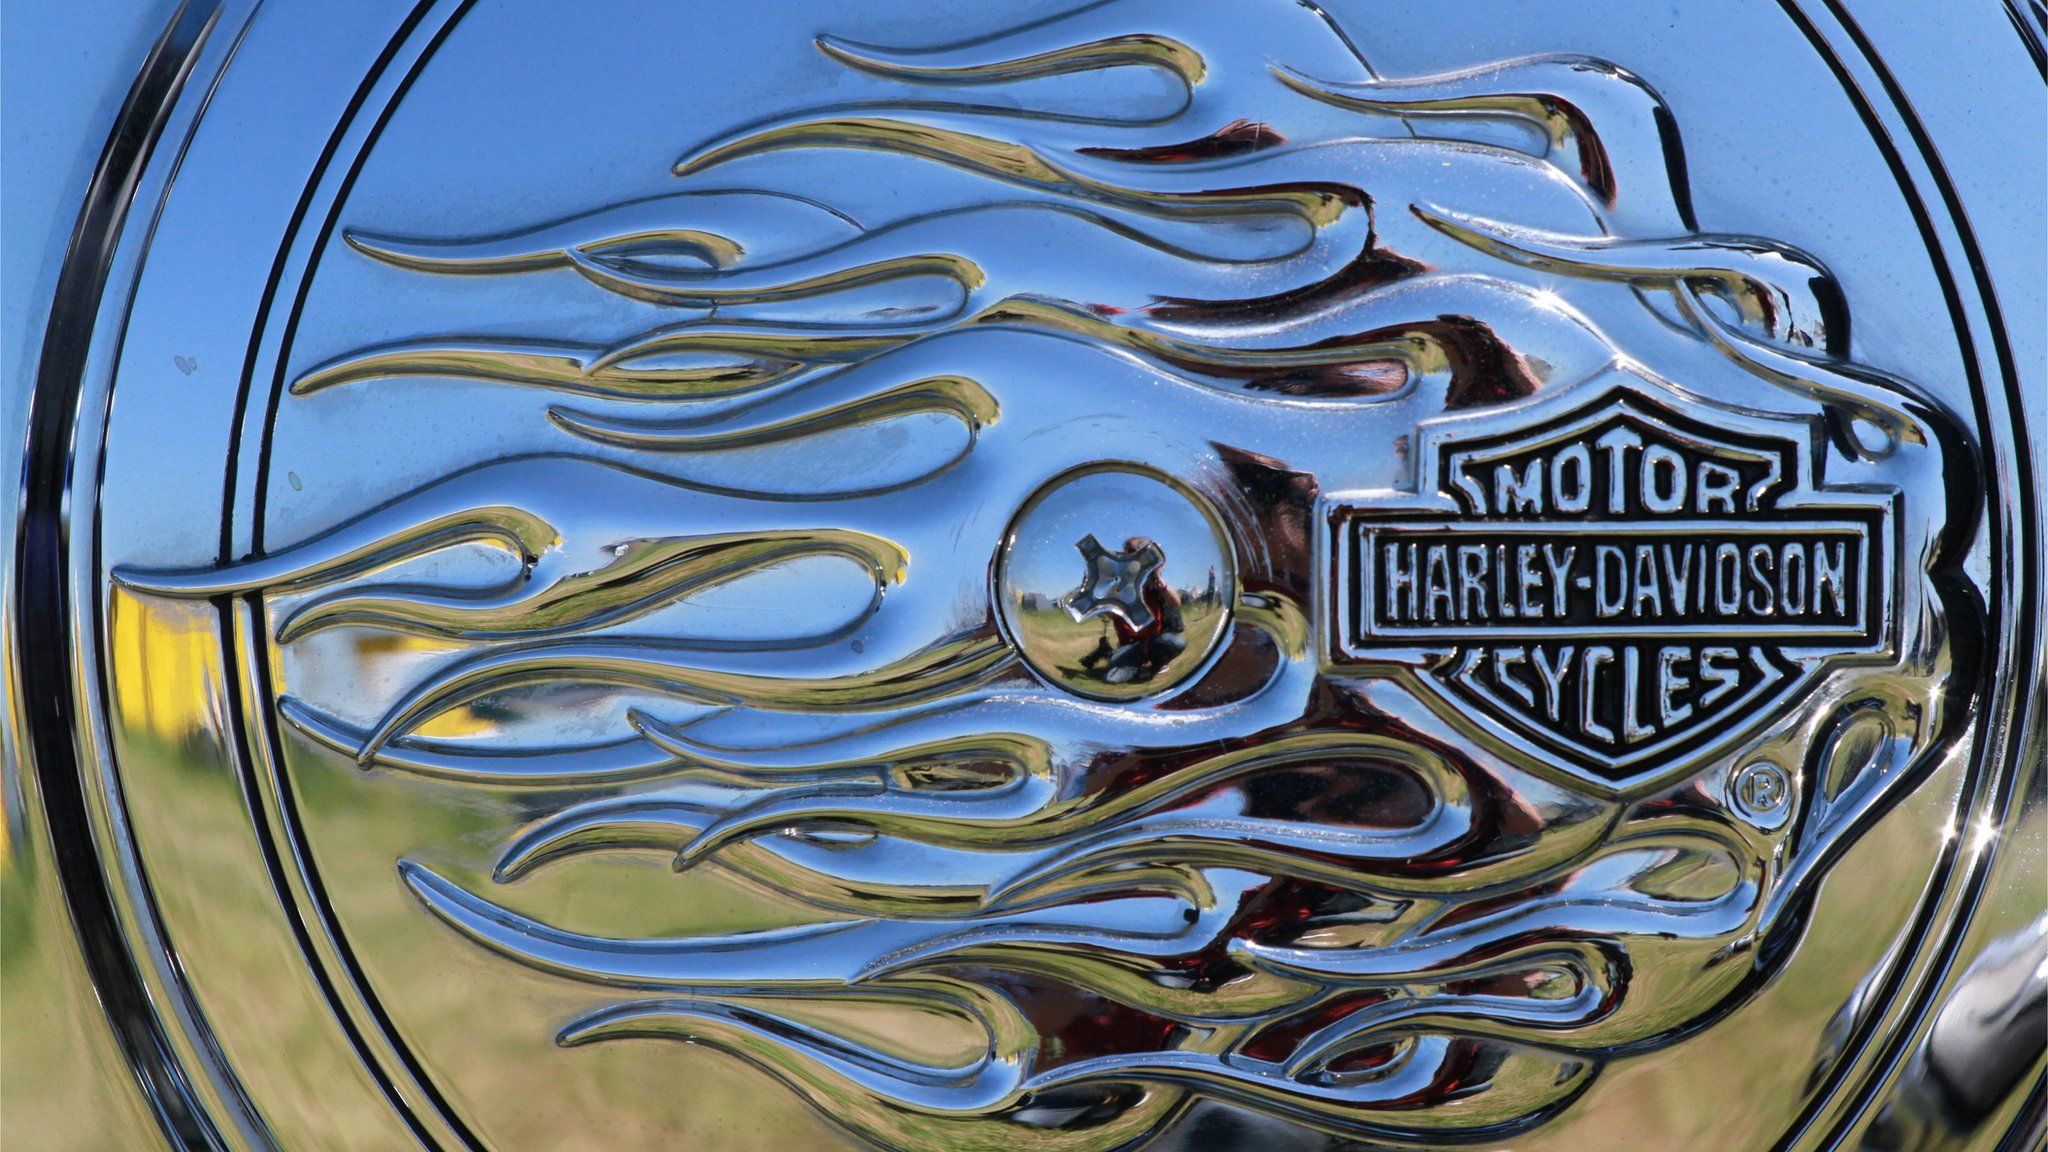 Close up of Harley Davidson logo on a bike